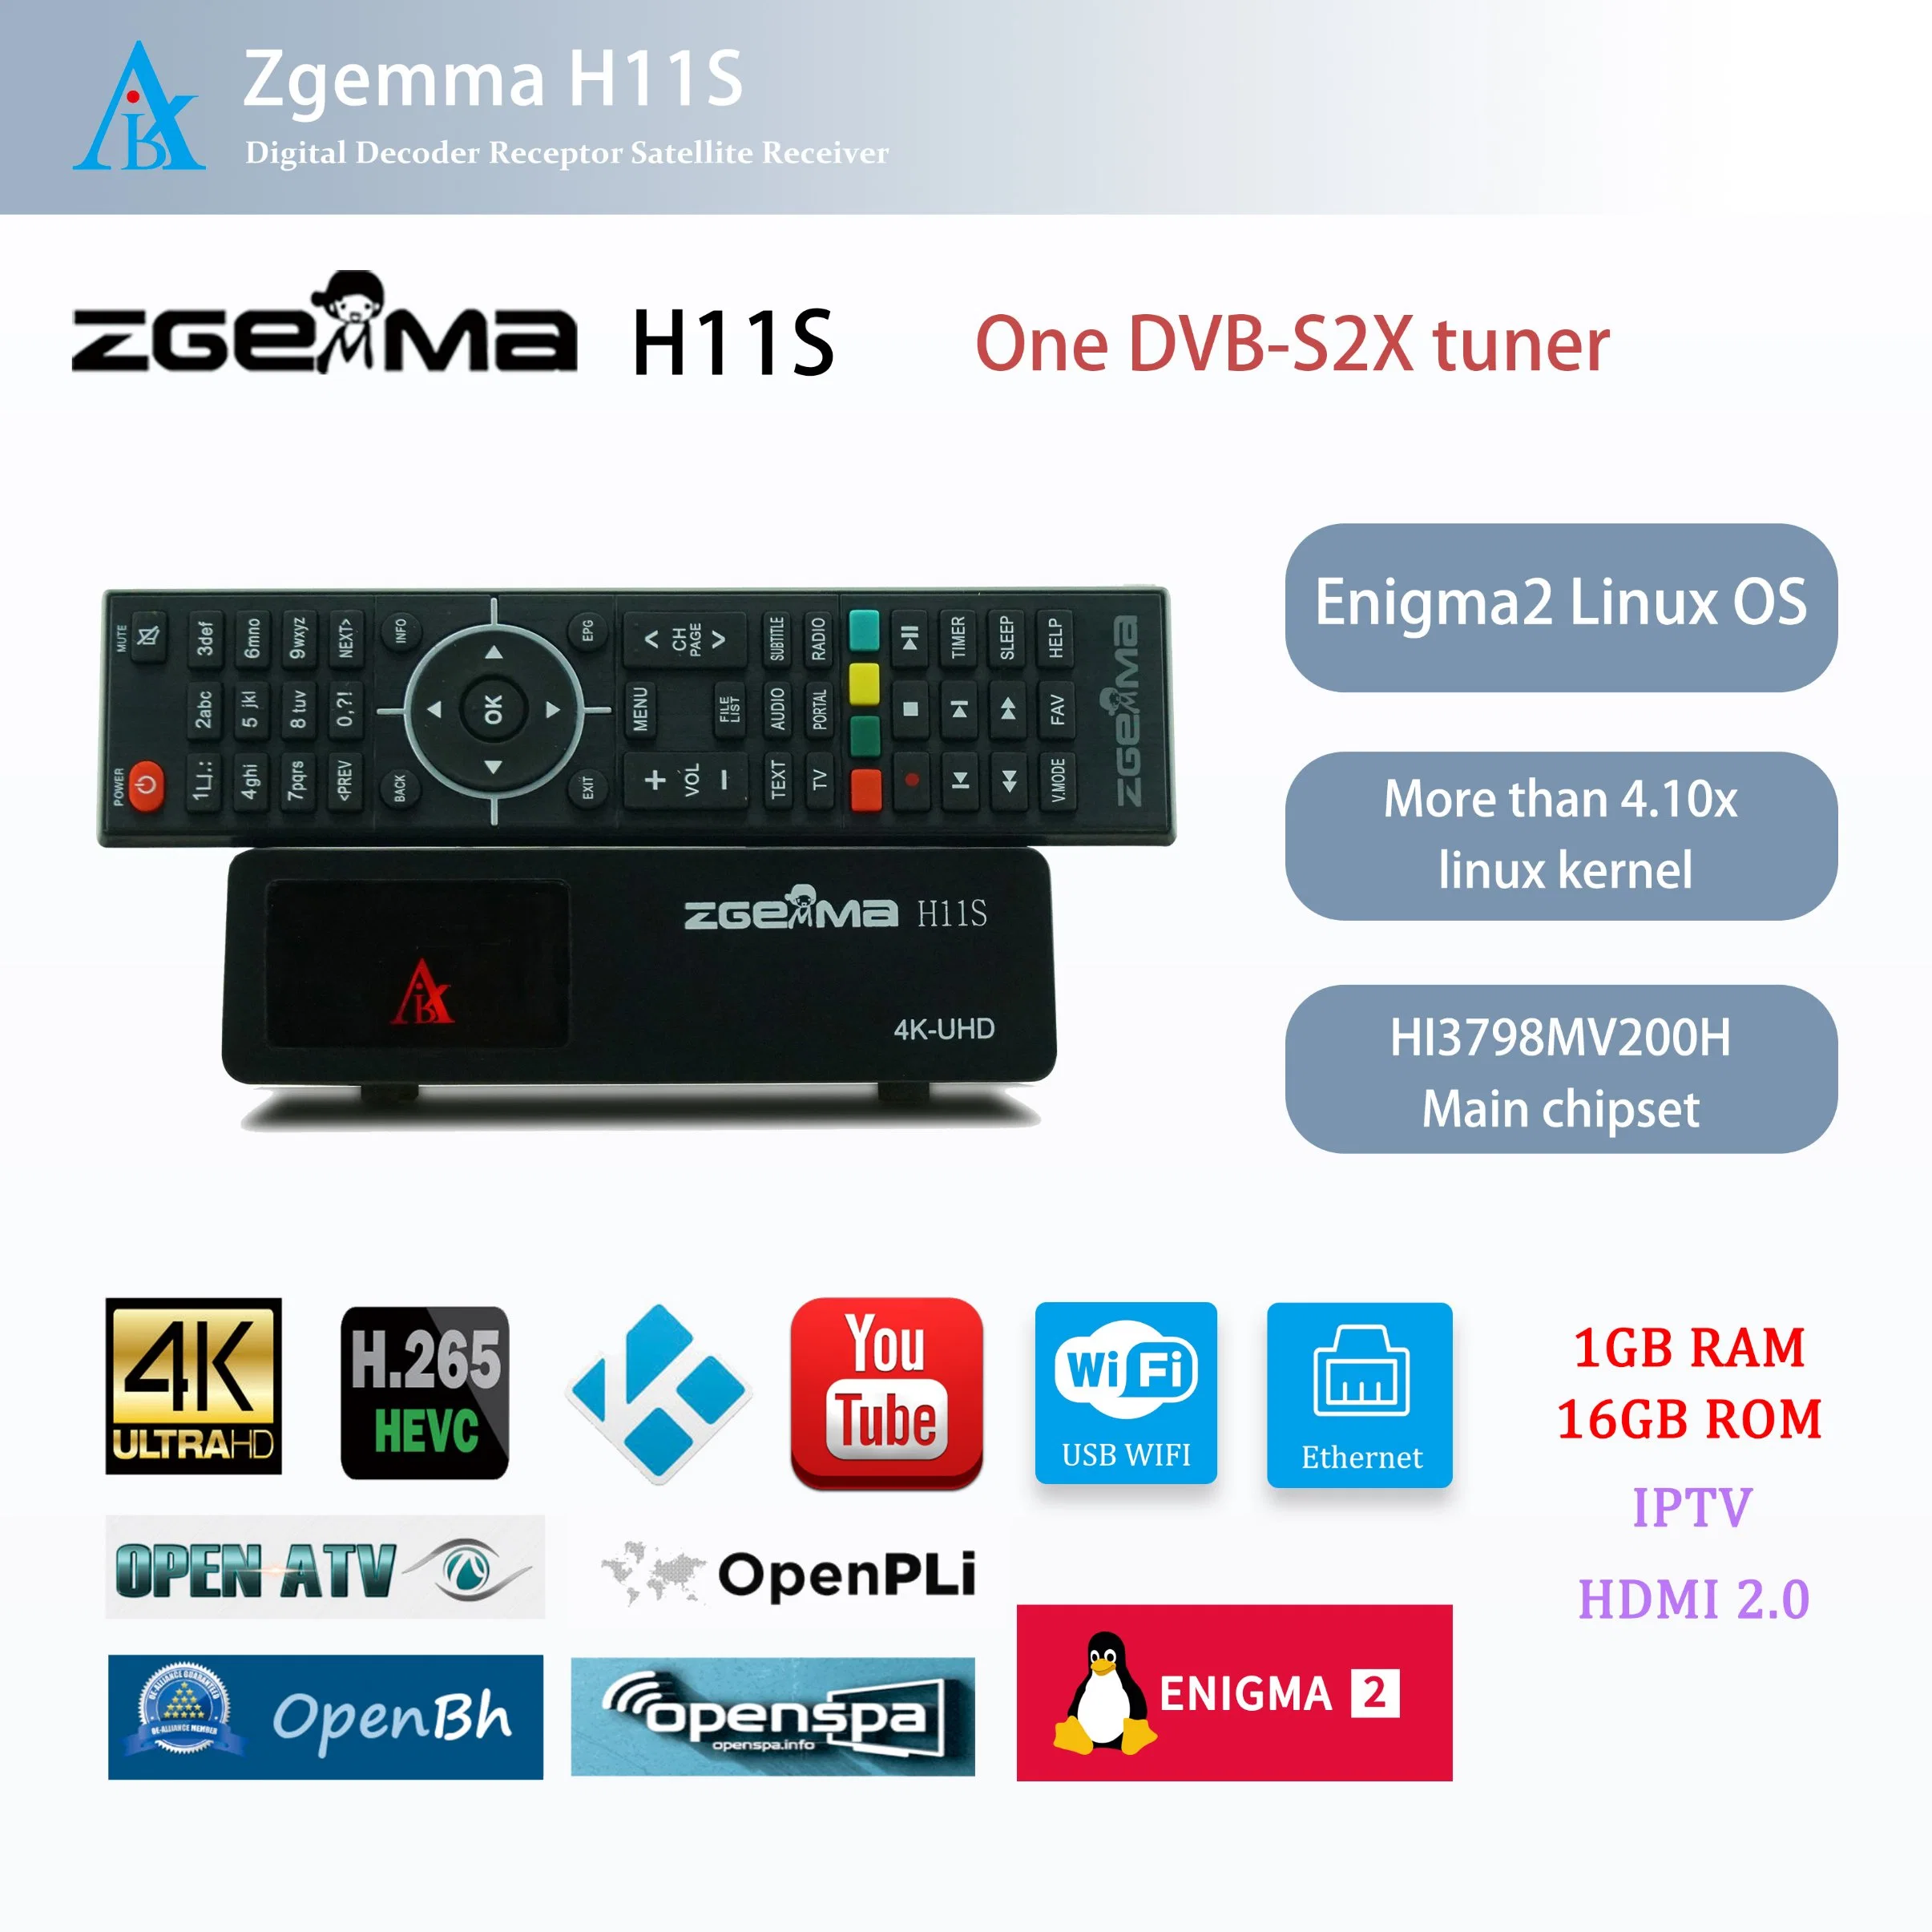 Cutting-Edge Zgemma H11s Satellite Receivers - Enigma2 Linux OS, One DVB-S2X Tuner, TV Decoder